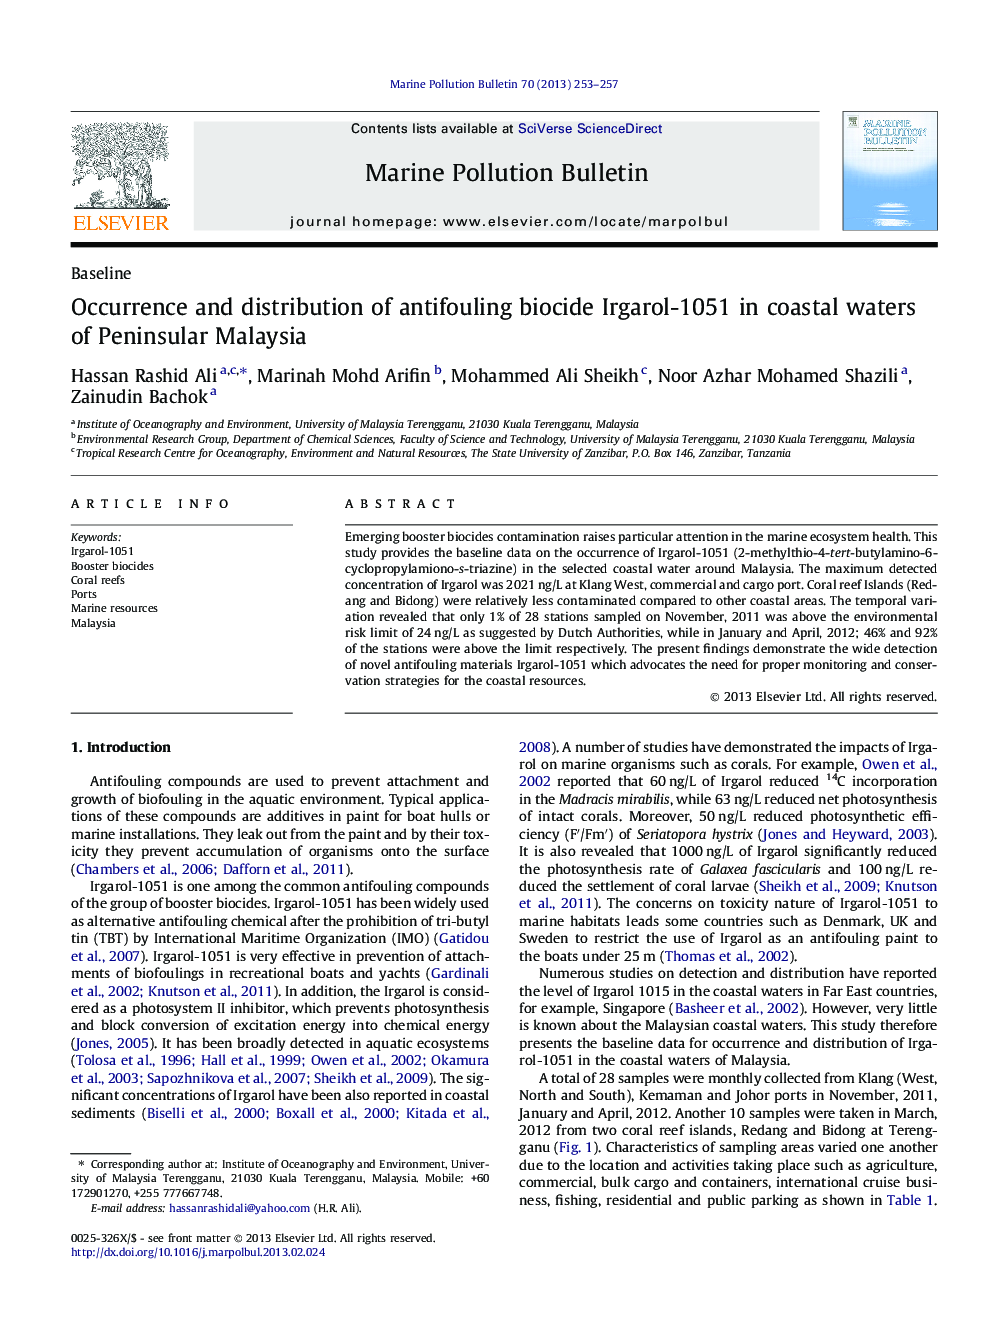 Occurrence and distribution of antifouling biocide Irgarol-1051 in coastal waters of Peninsular Malaysia